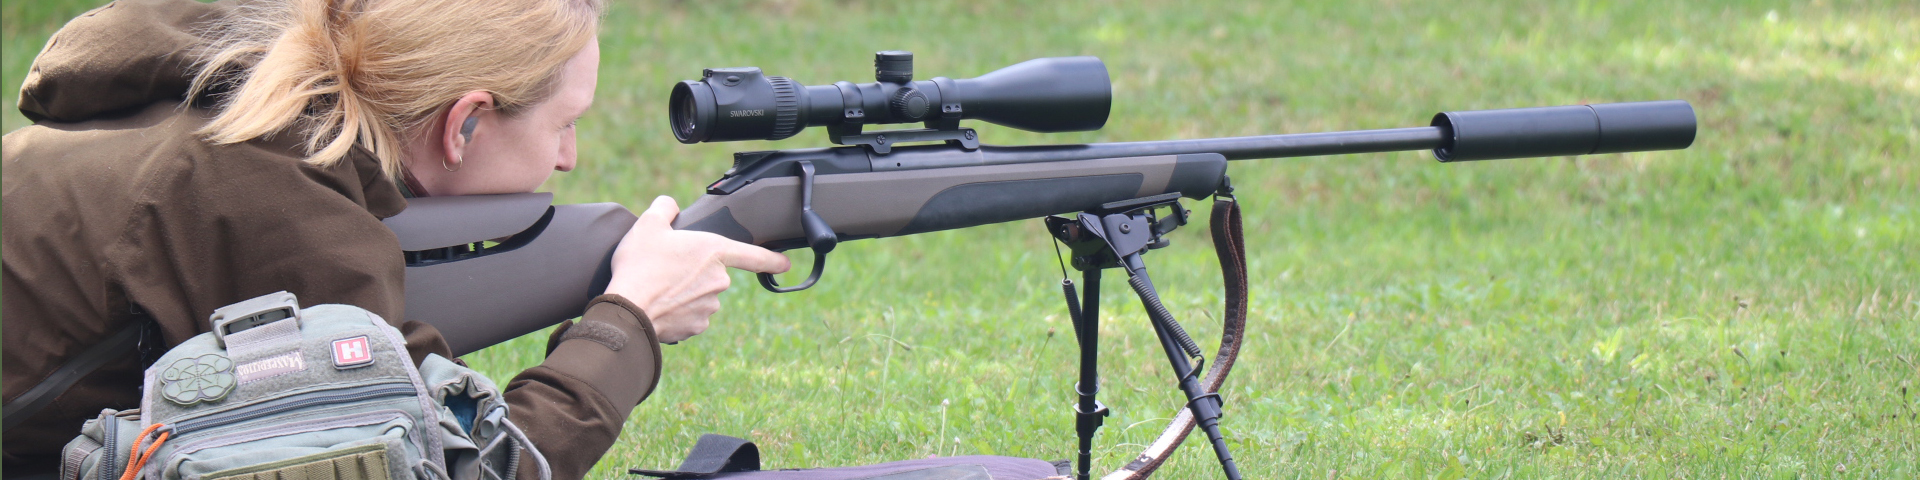 Corinium Rifle Range shooting tuition